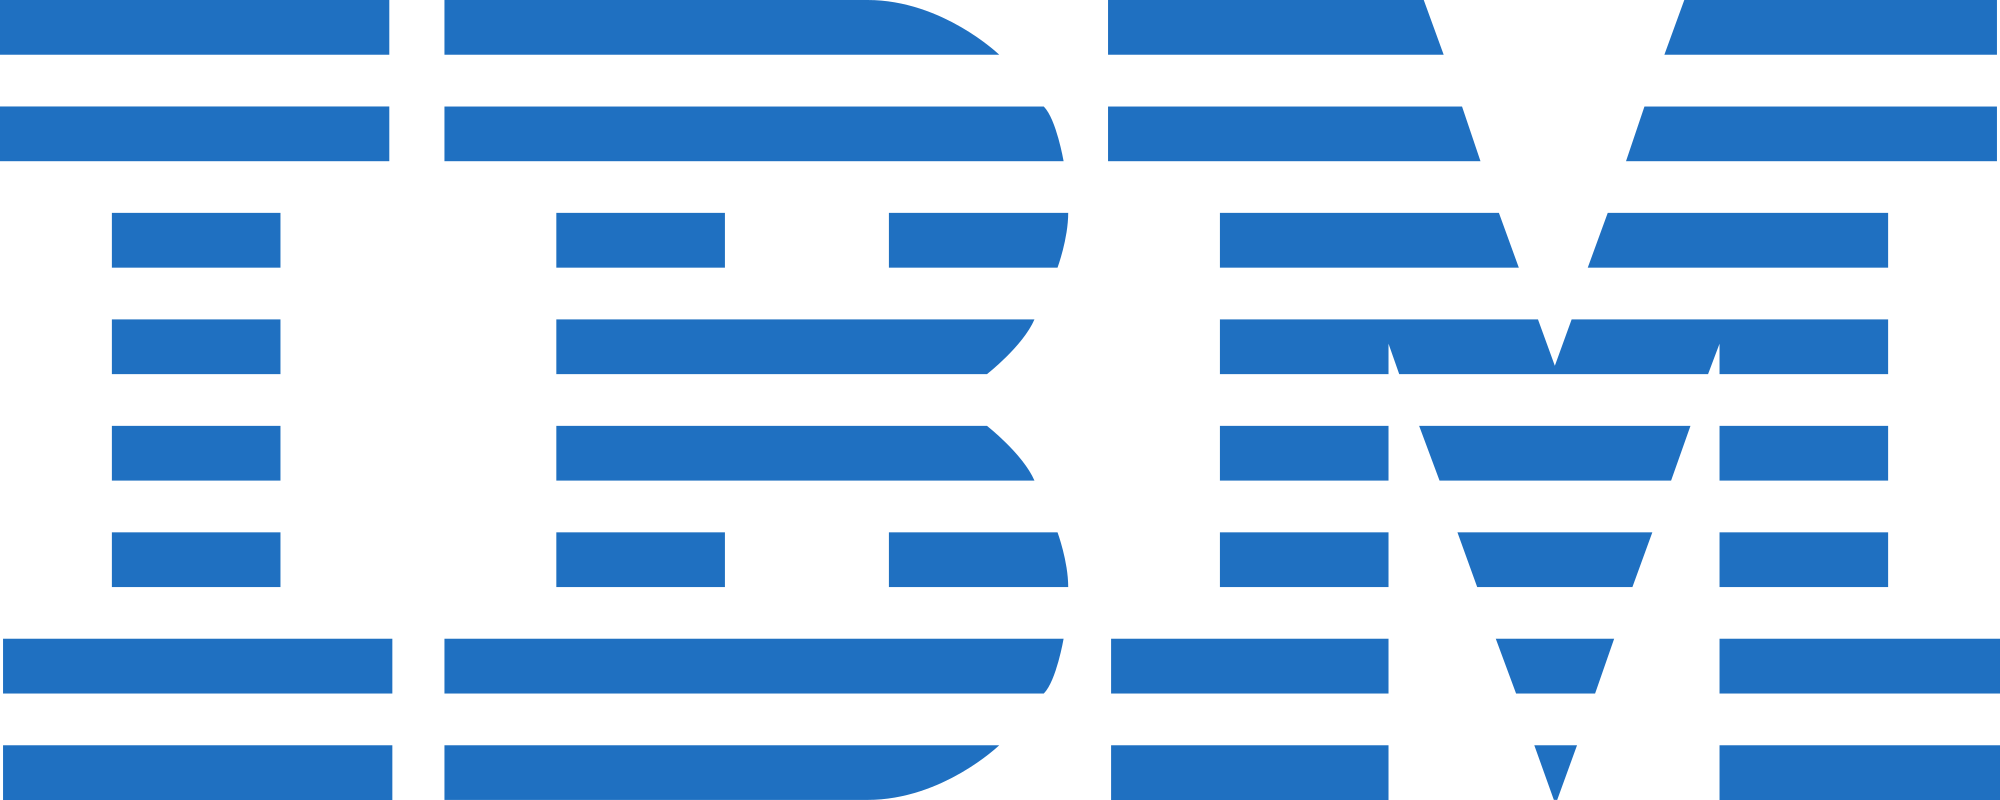 Logo Ibm PNG-PlusPNG.com-1920